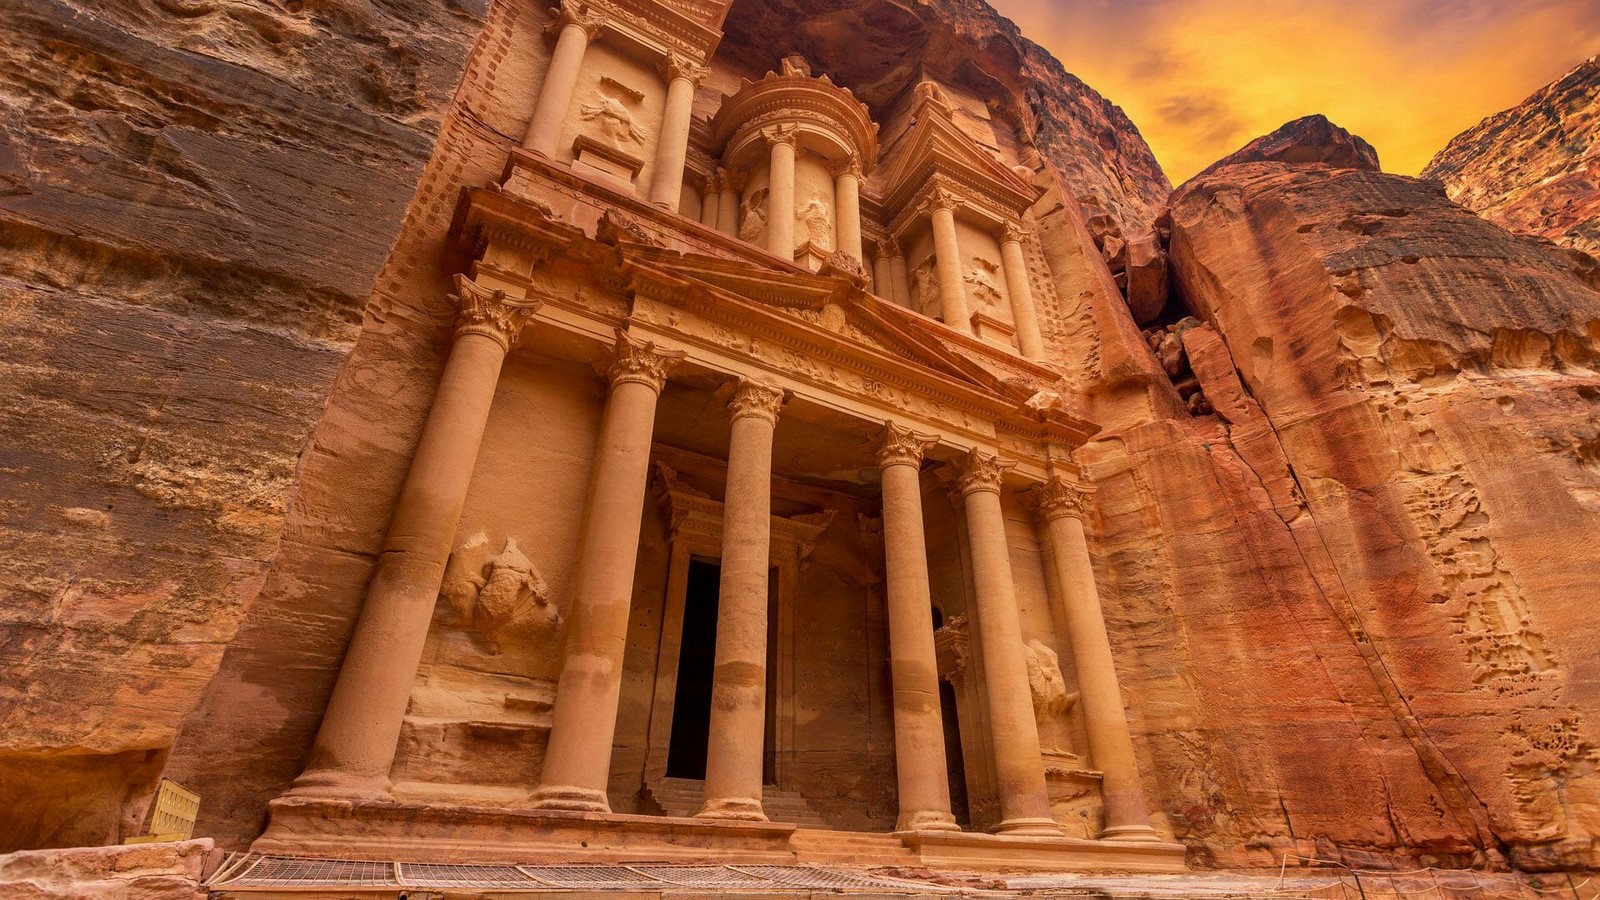 The Ancient city of Petra, South Jordan - Sheet3